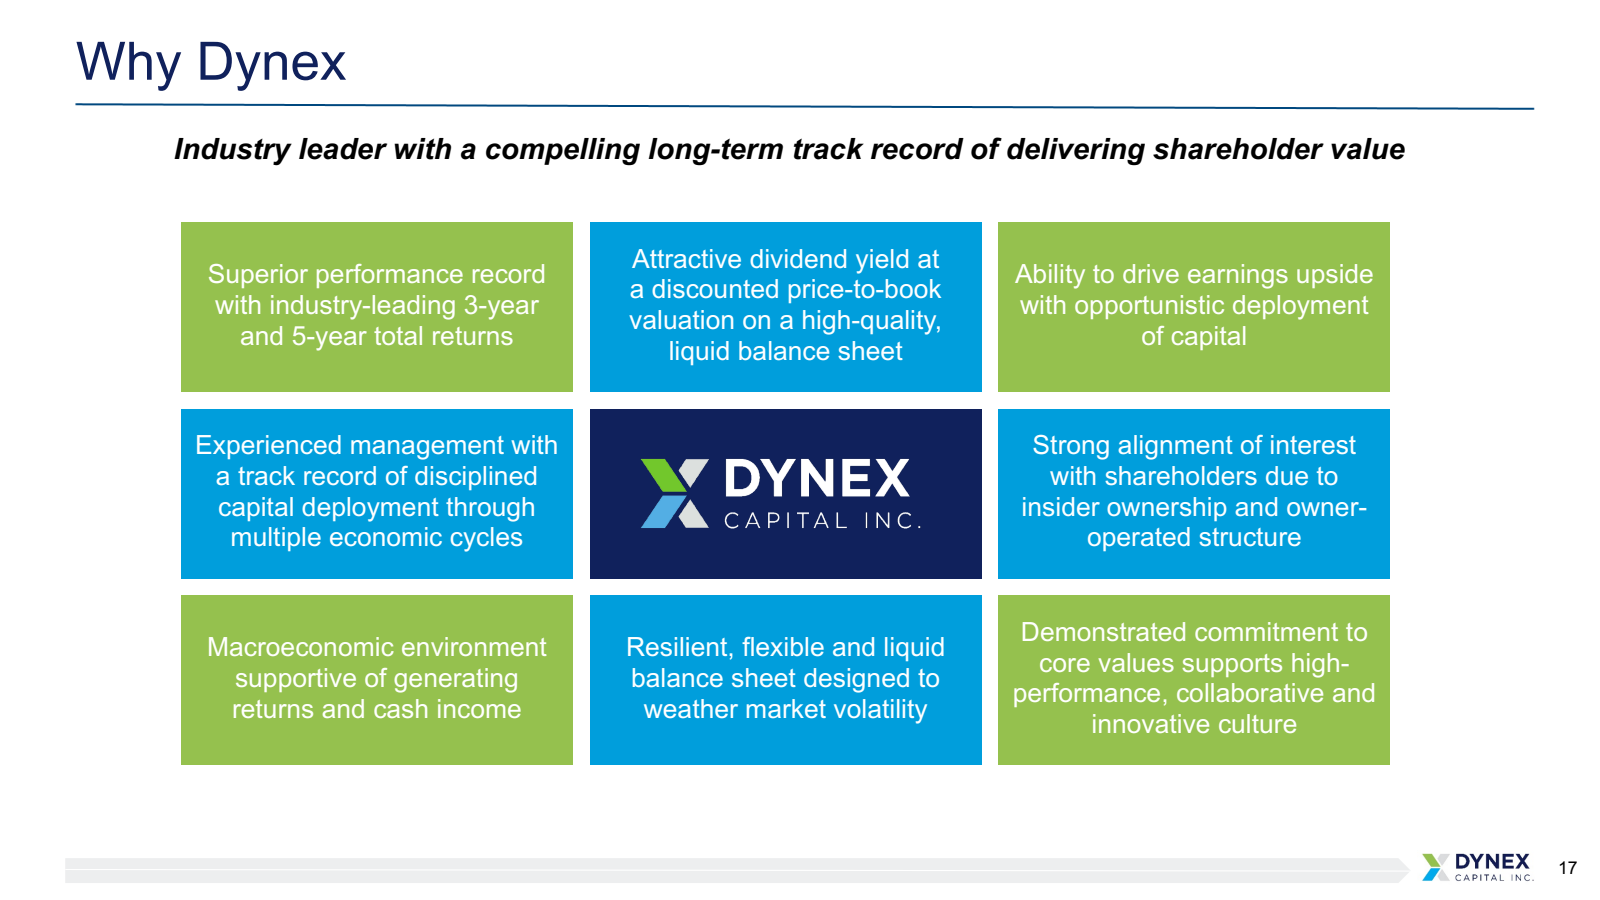 Why Dynex 

Industry